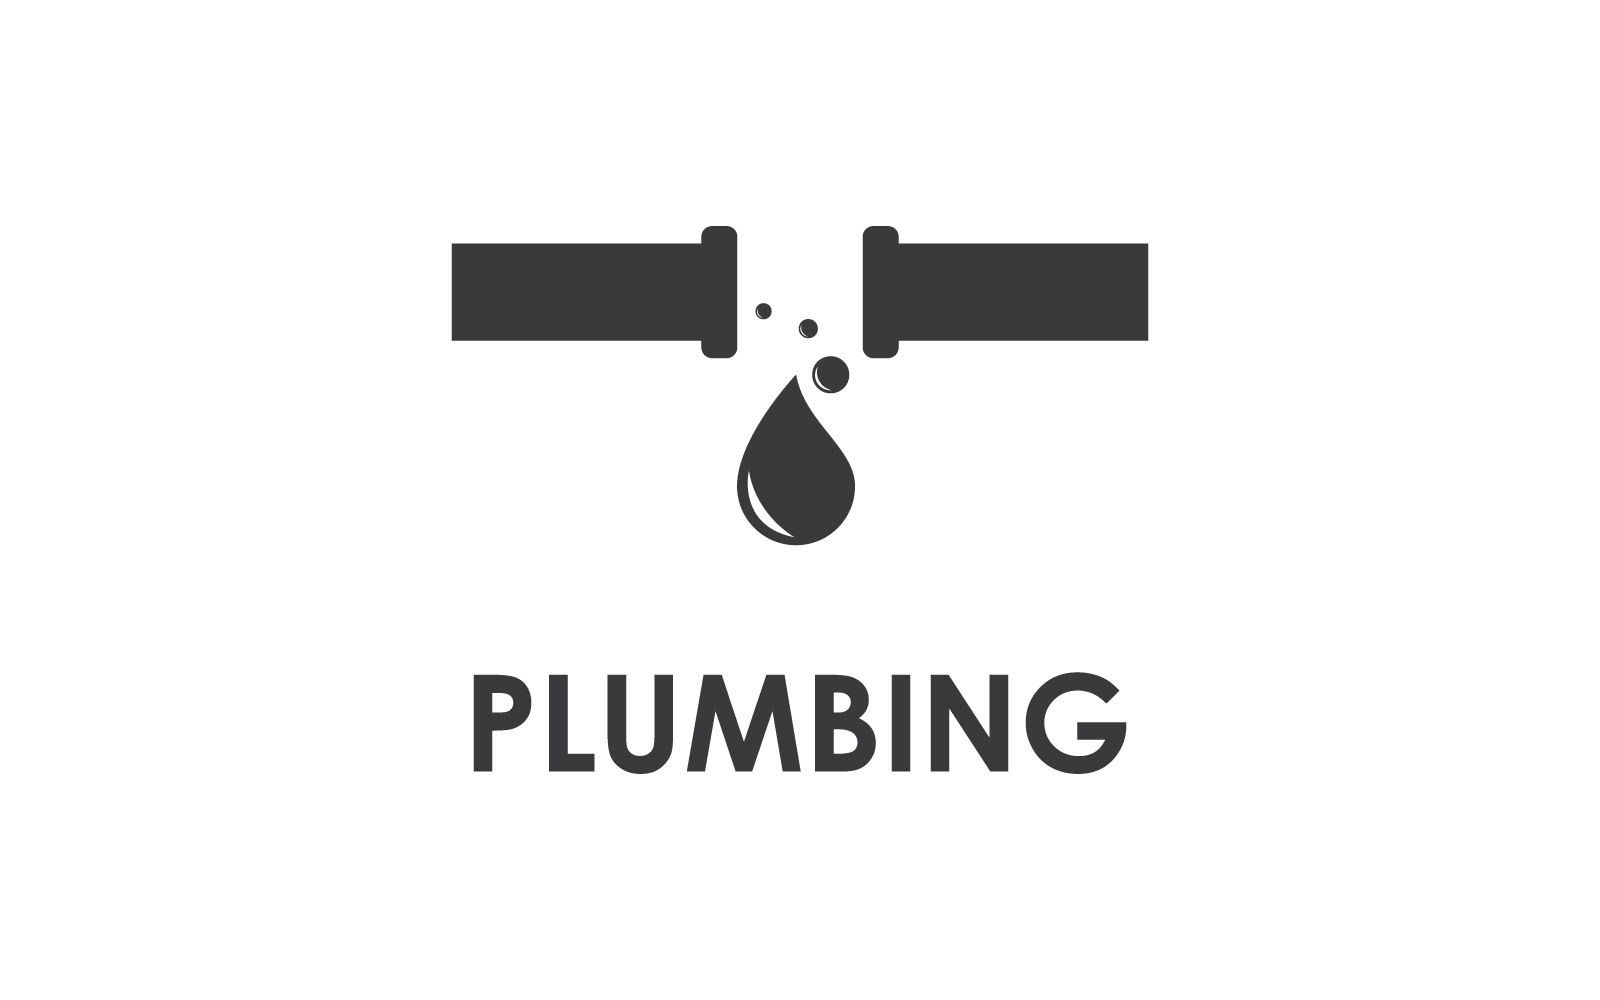 Plumbing logo vector illustration template